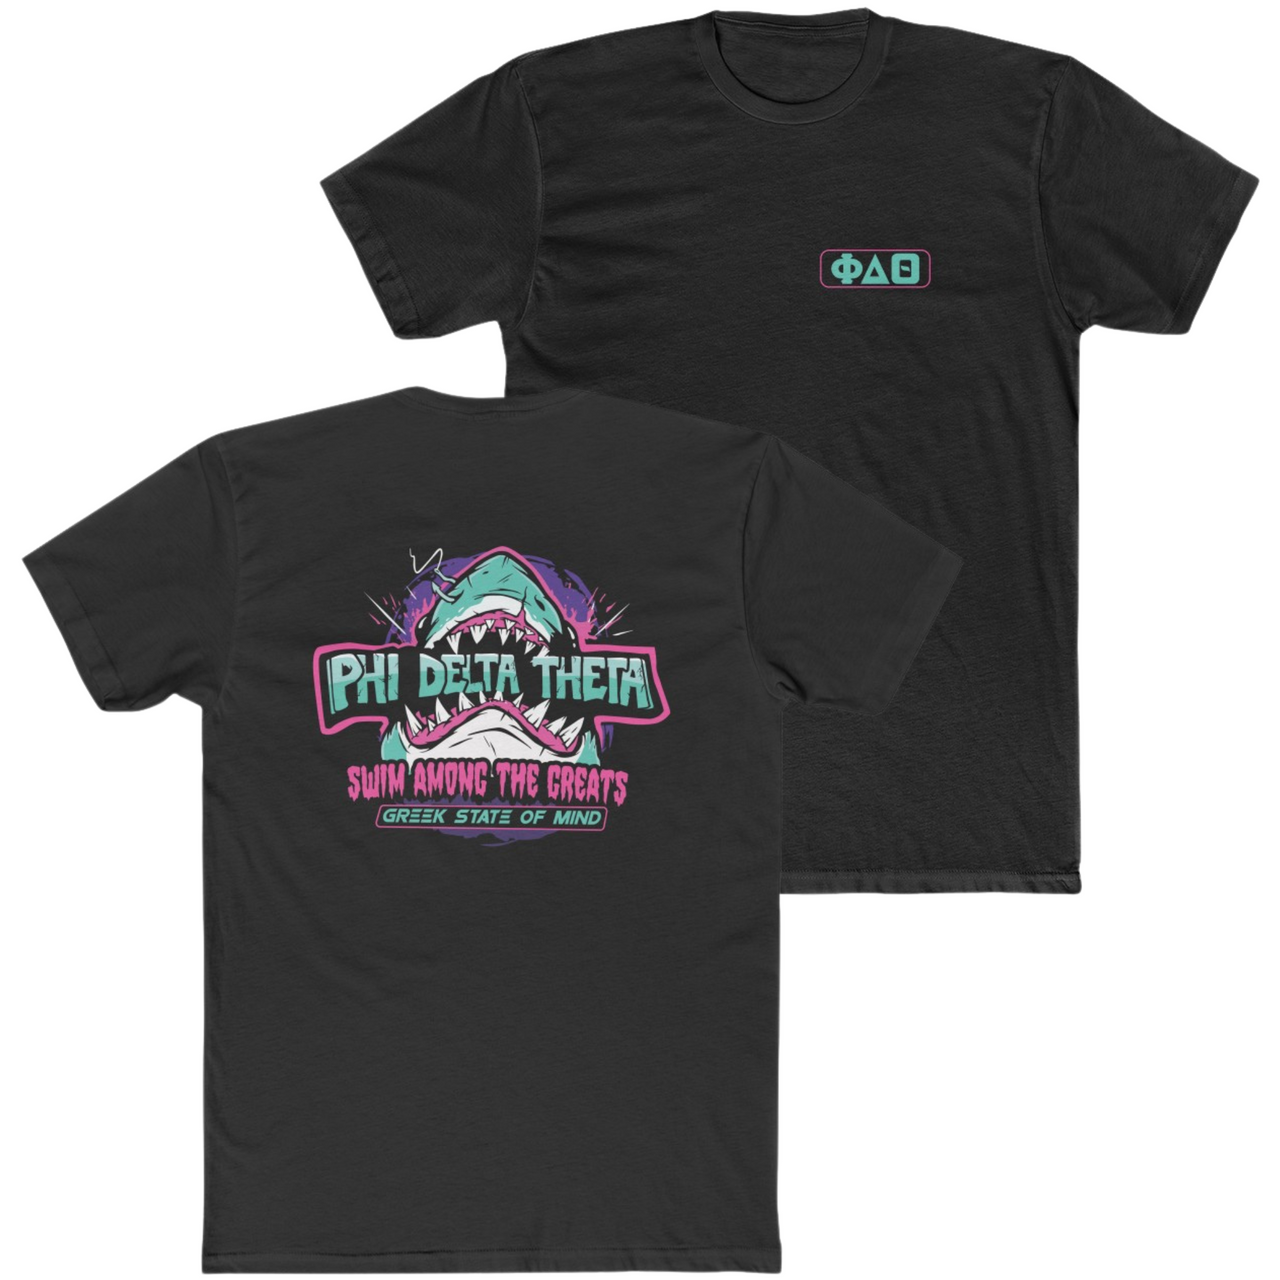 Black Phi Delta Theta Graphic T-Shirt | The Deep End | phi delta theta fraternity greek apparel 